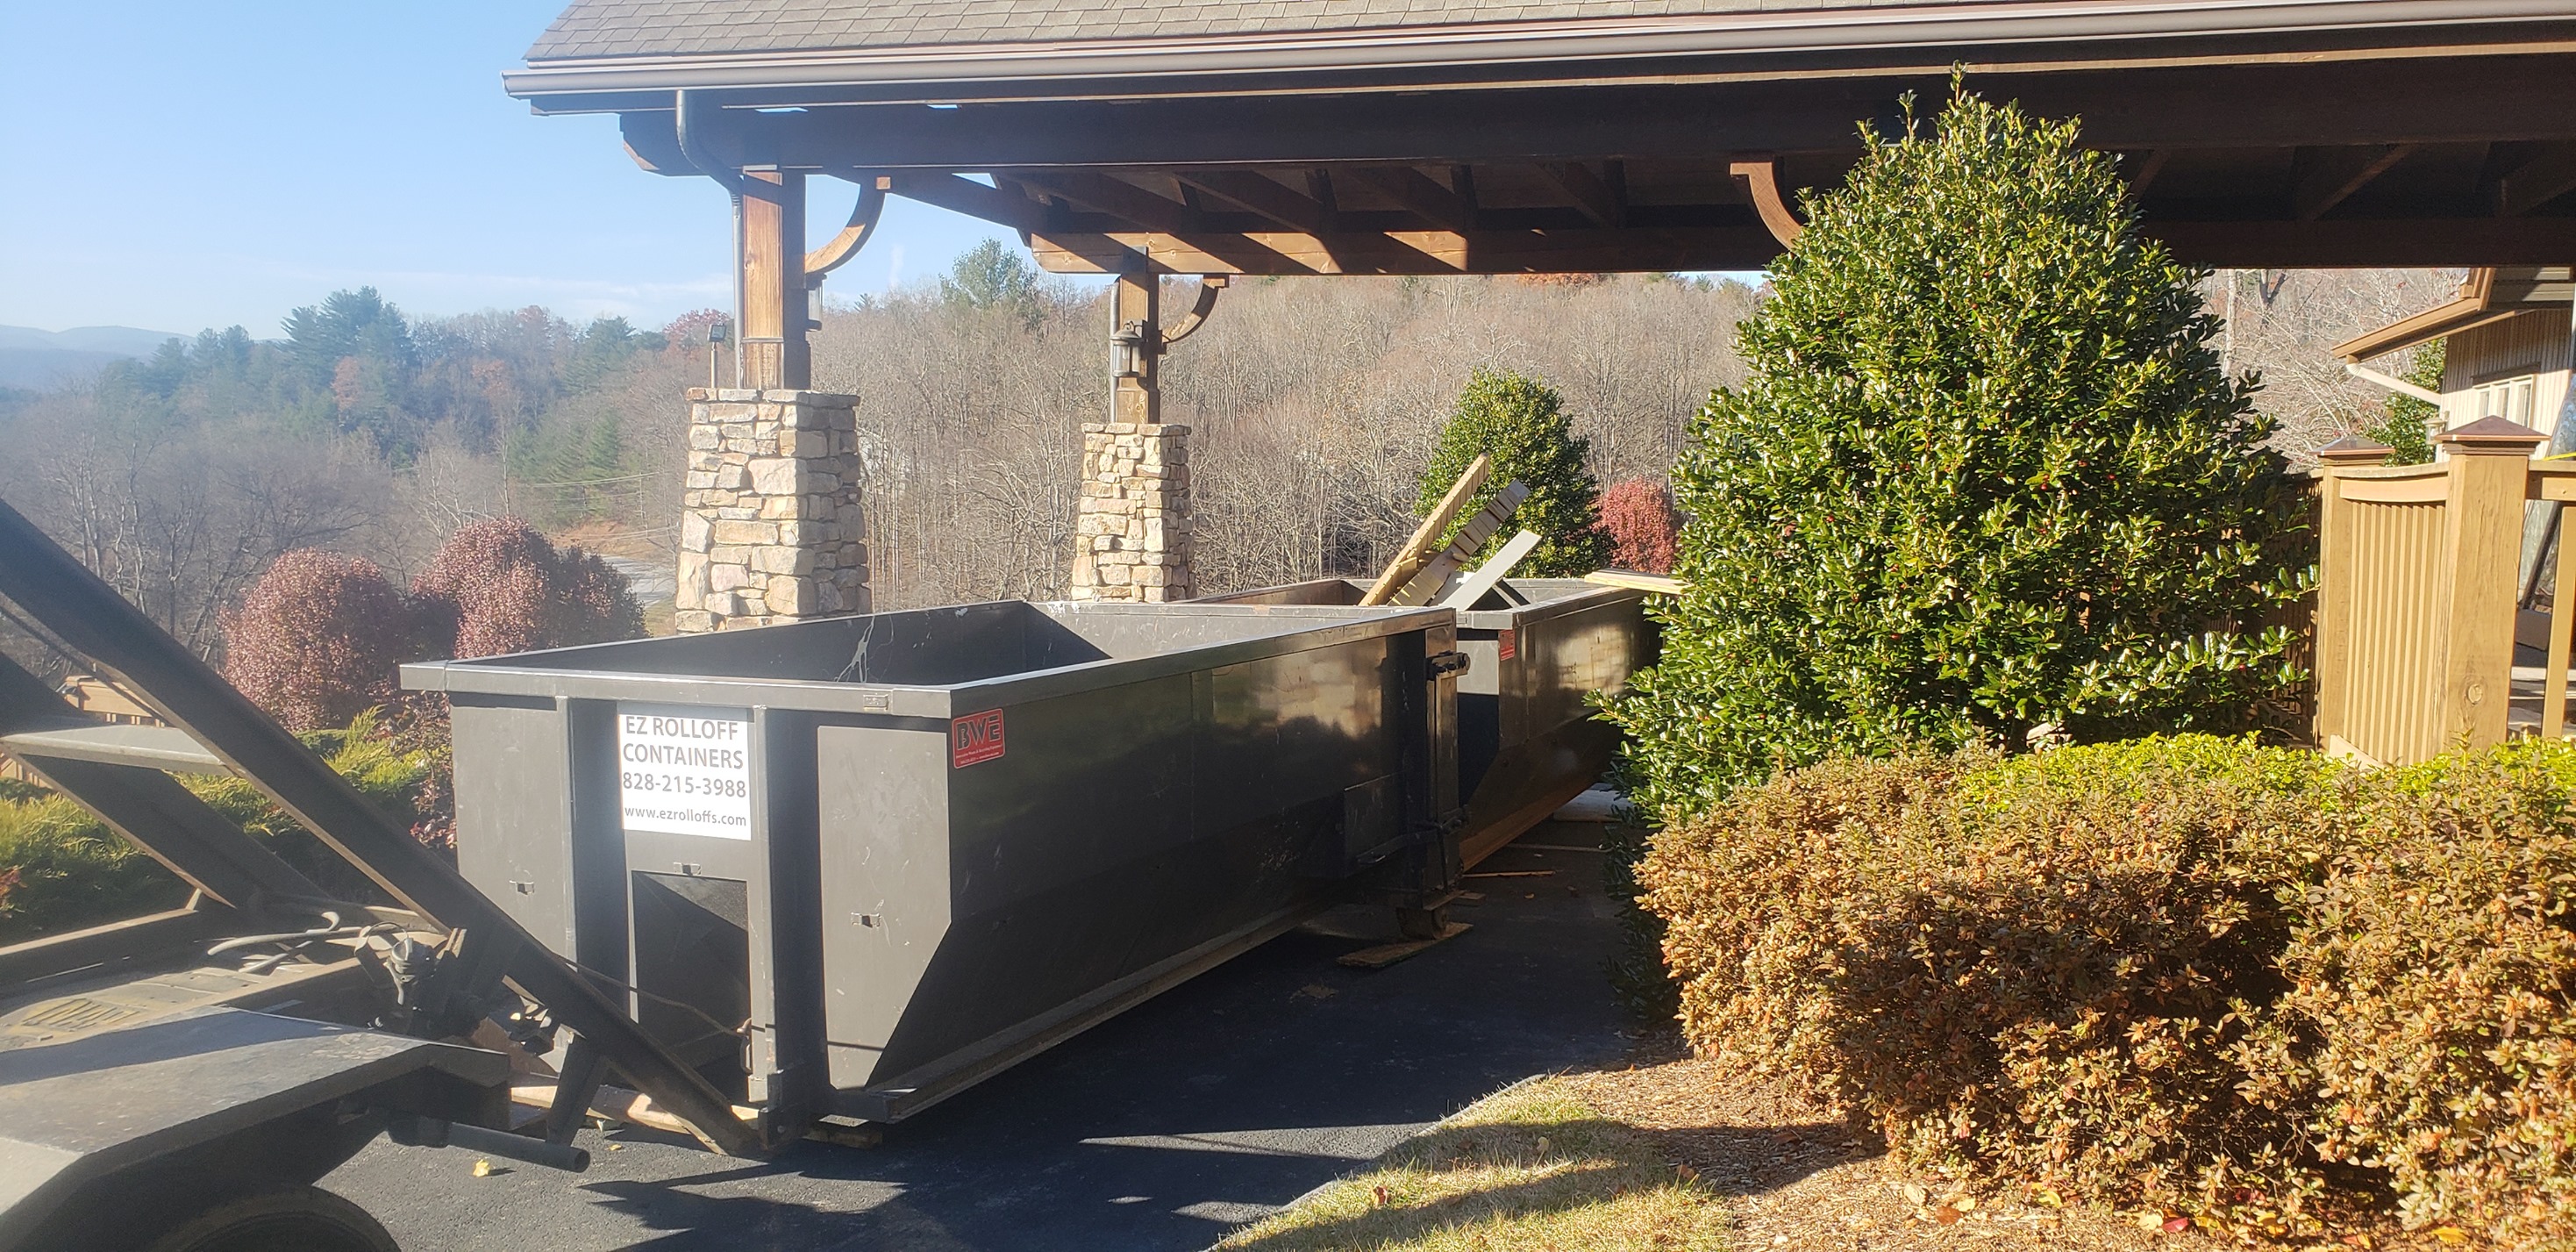 Rent A Dumpster in Hendersonville